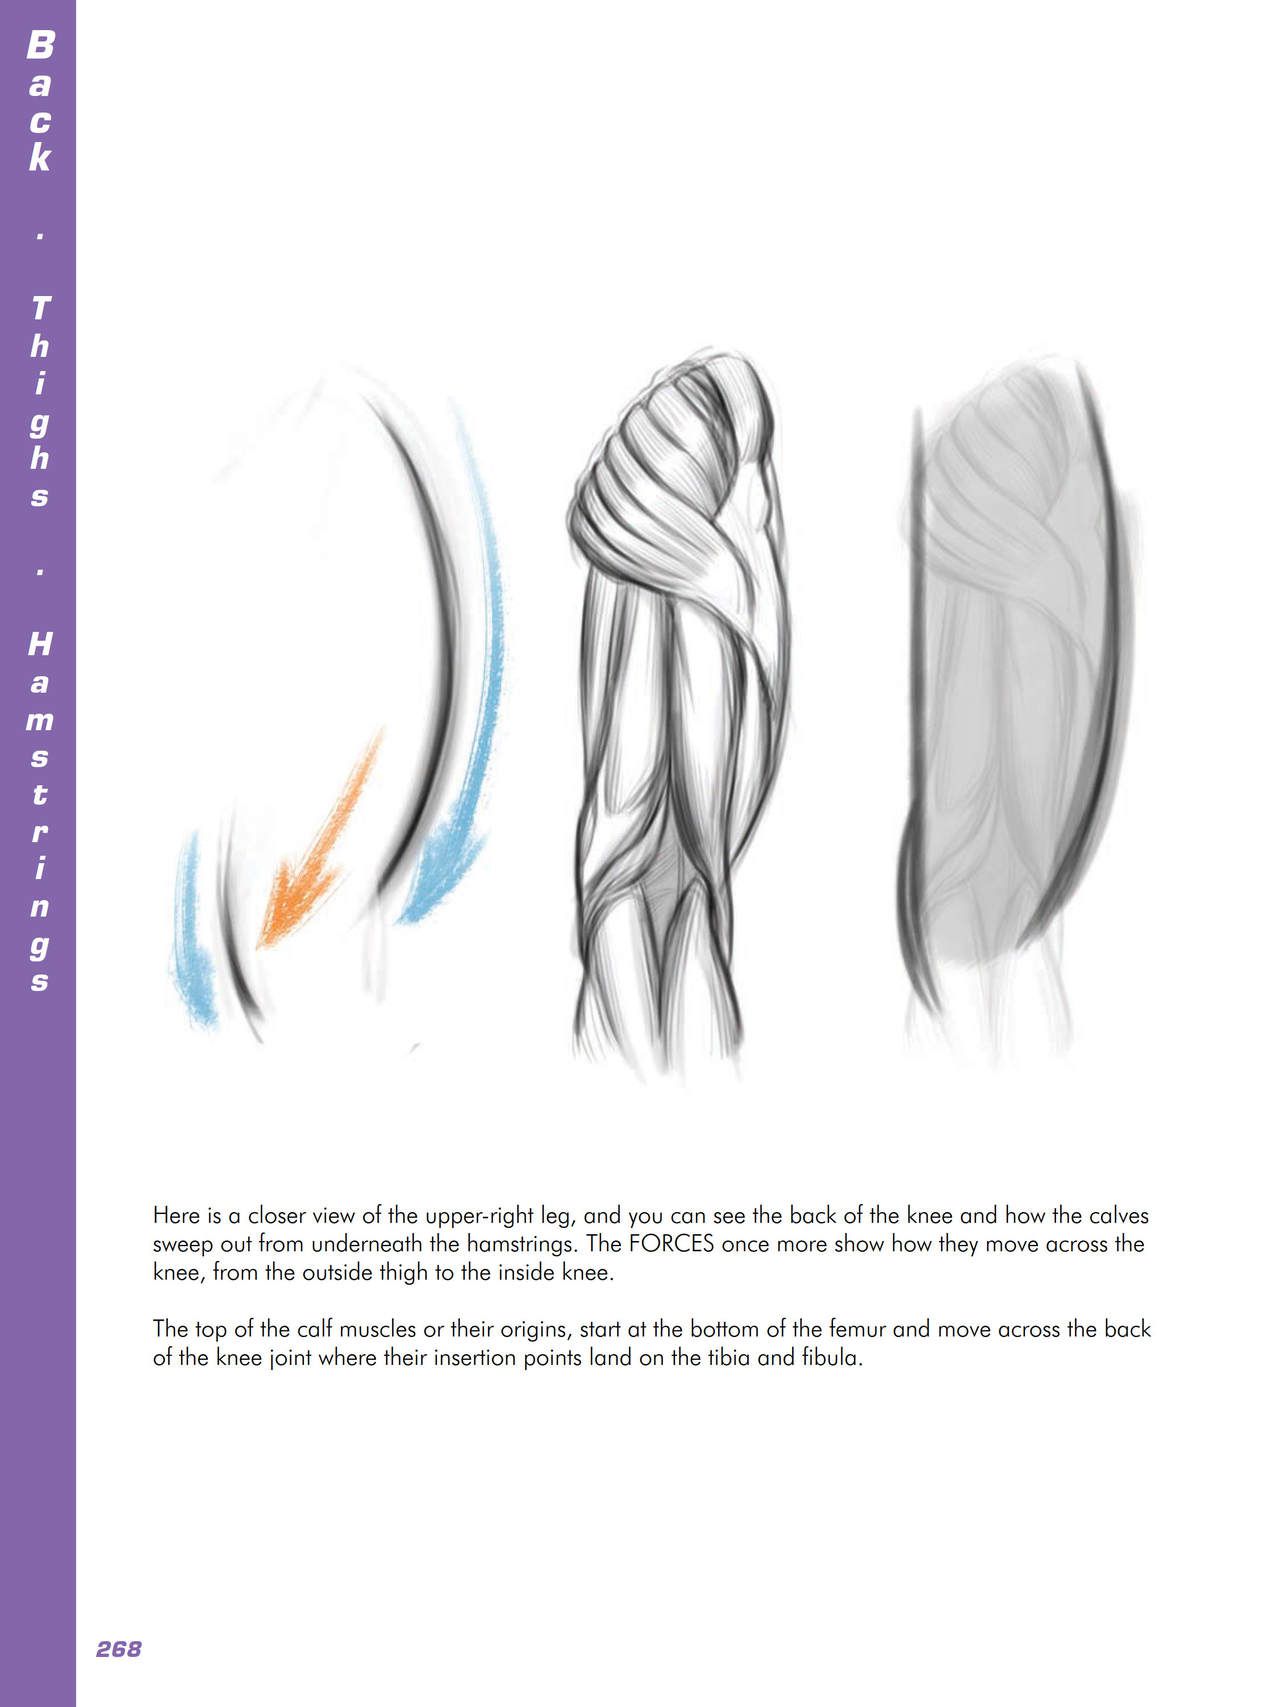 Force. Drawing human anatomy - Michael D. Mattesi [Digital] 289